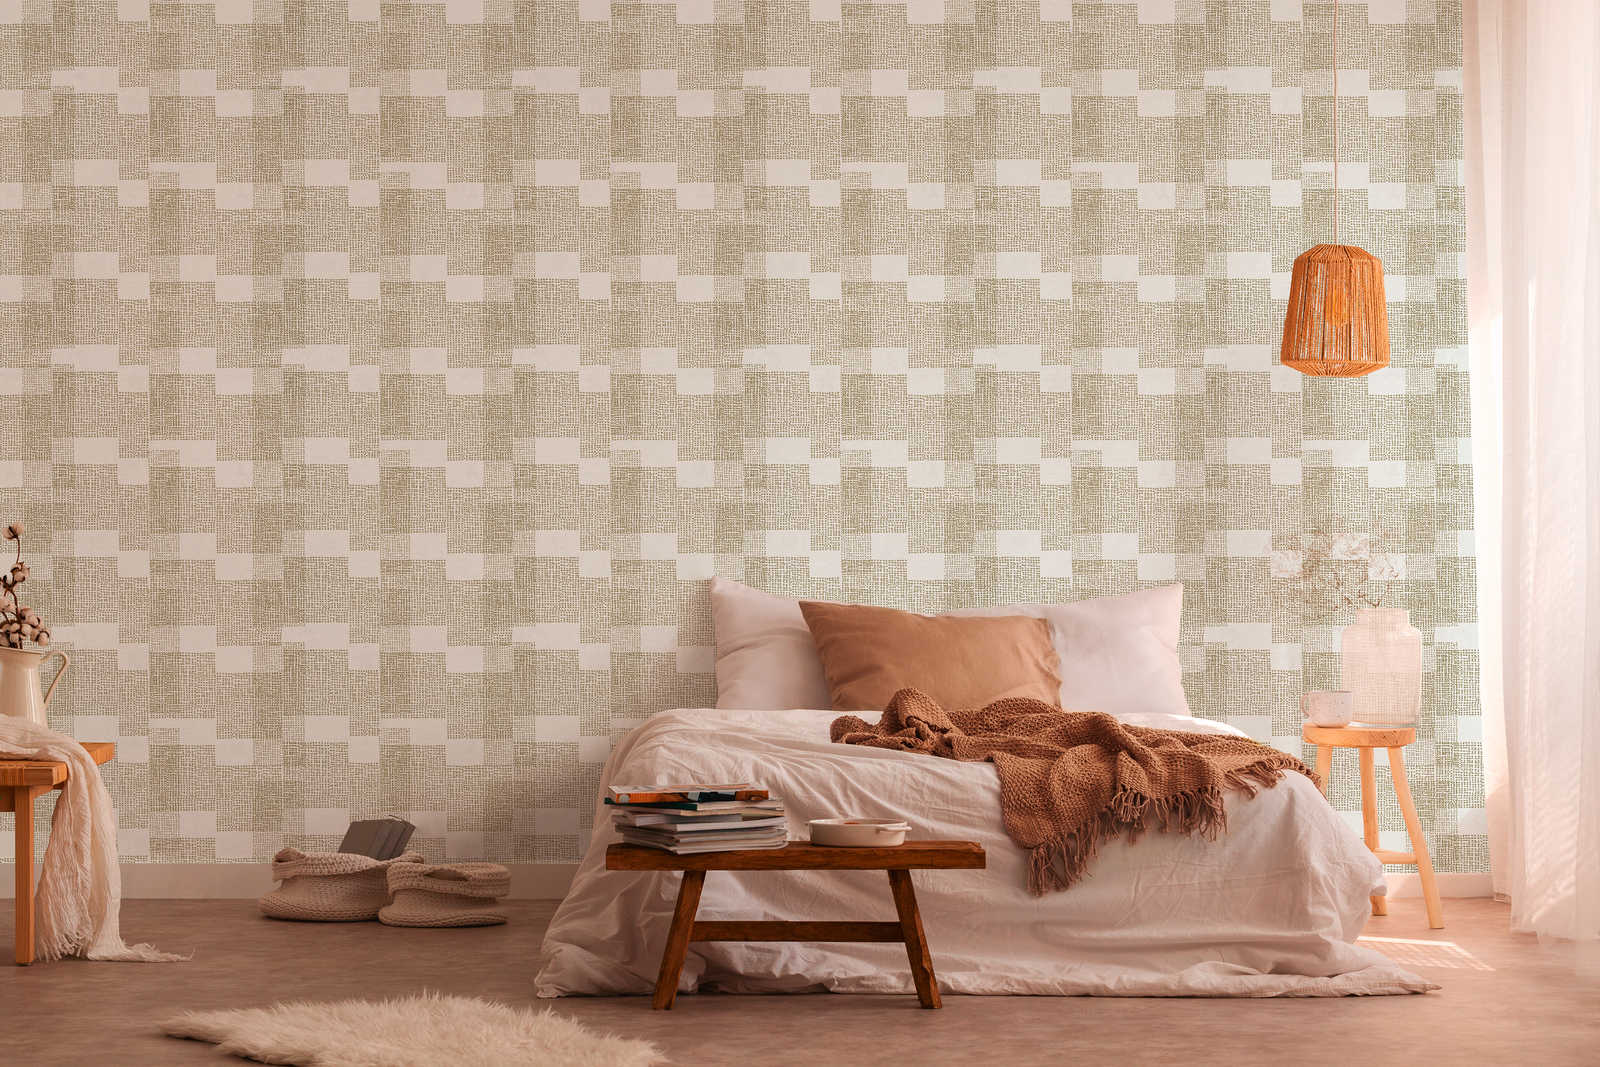             Non-woven wallpaper geometric ethnic design - cream, metallic
        